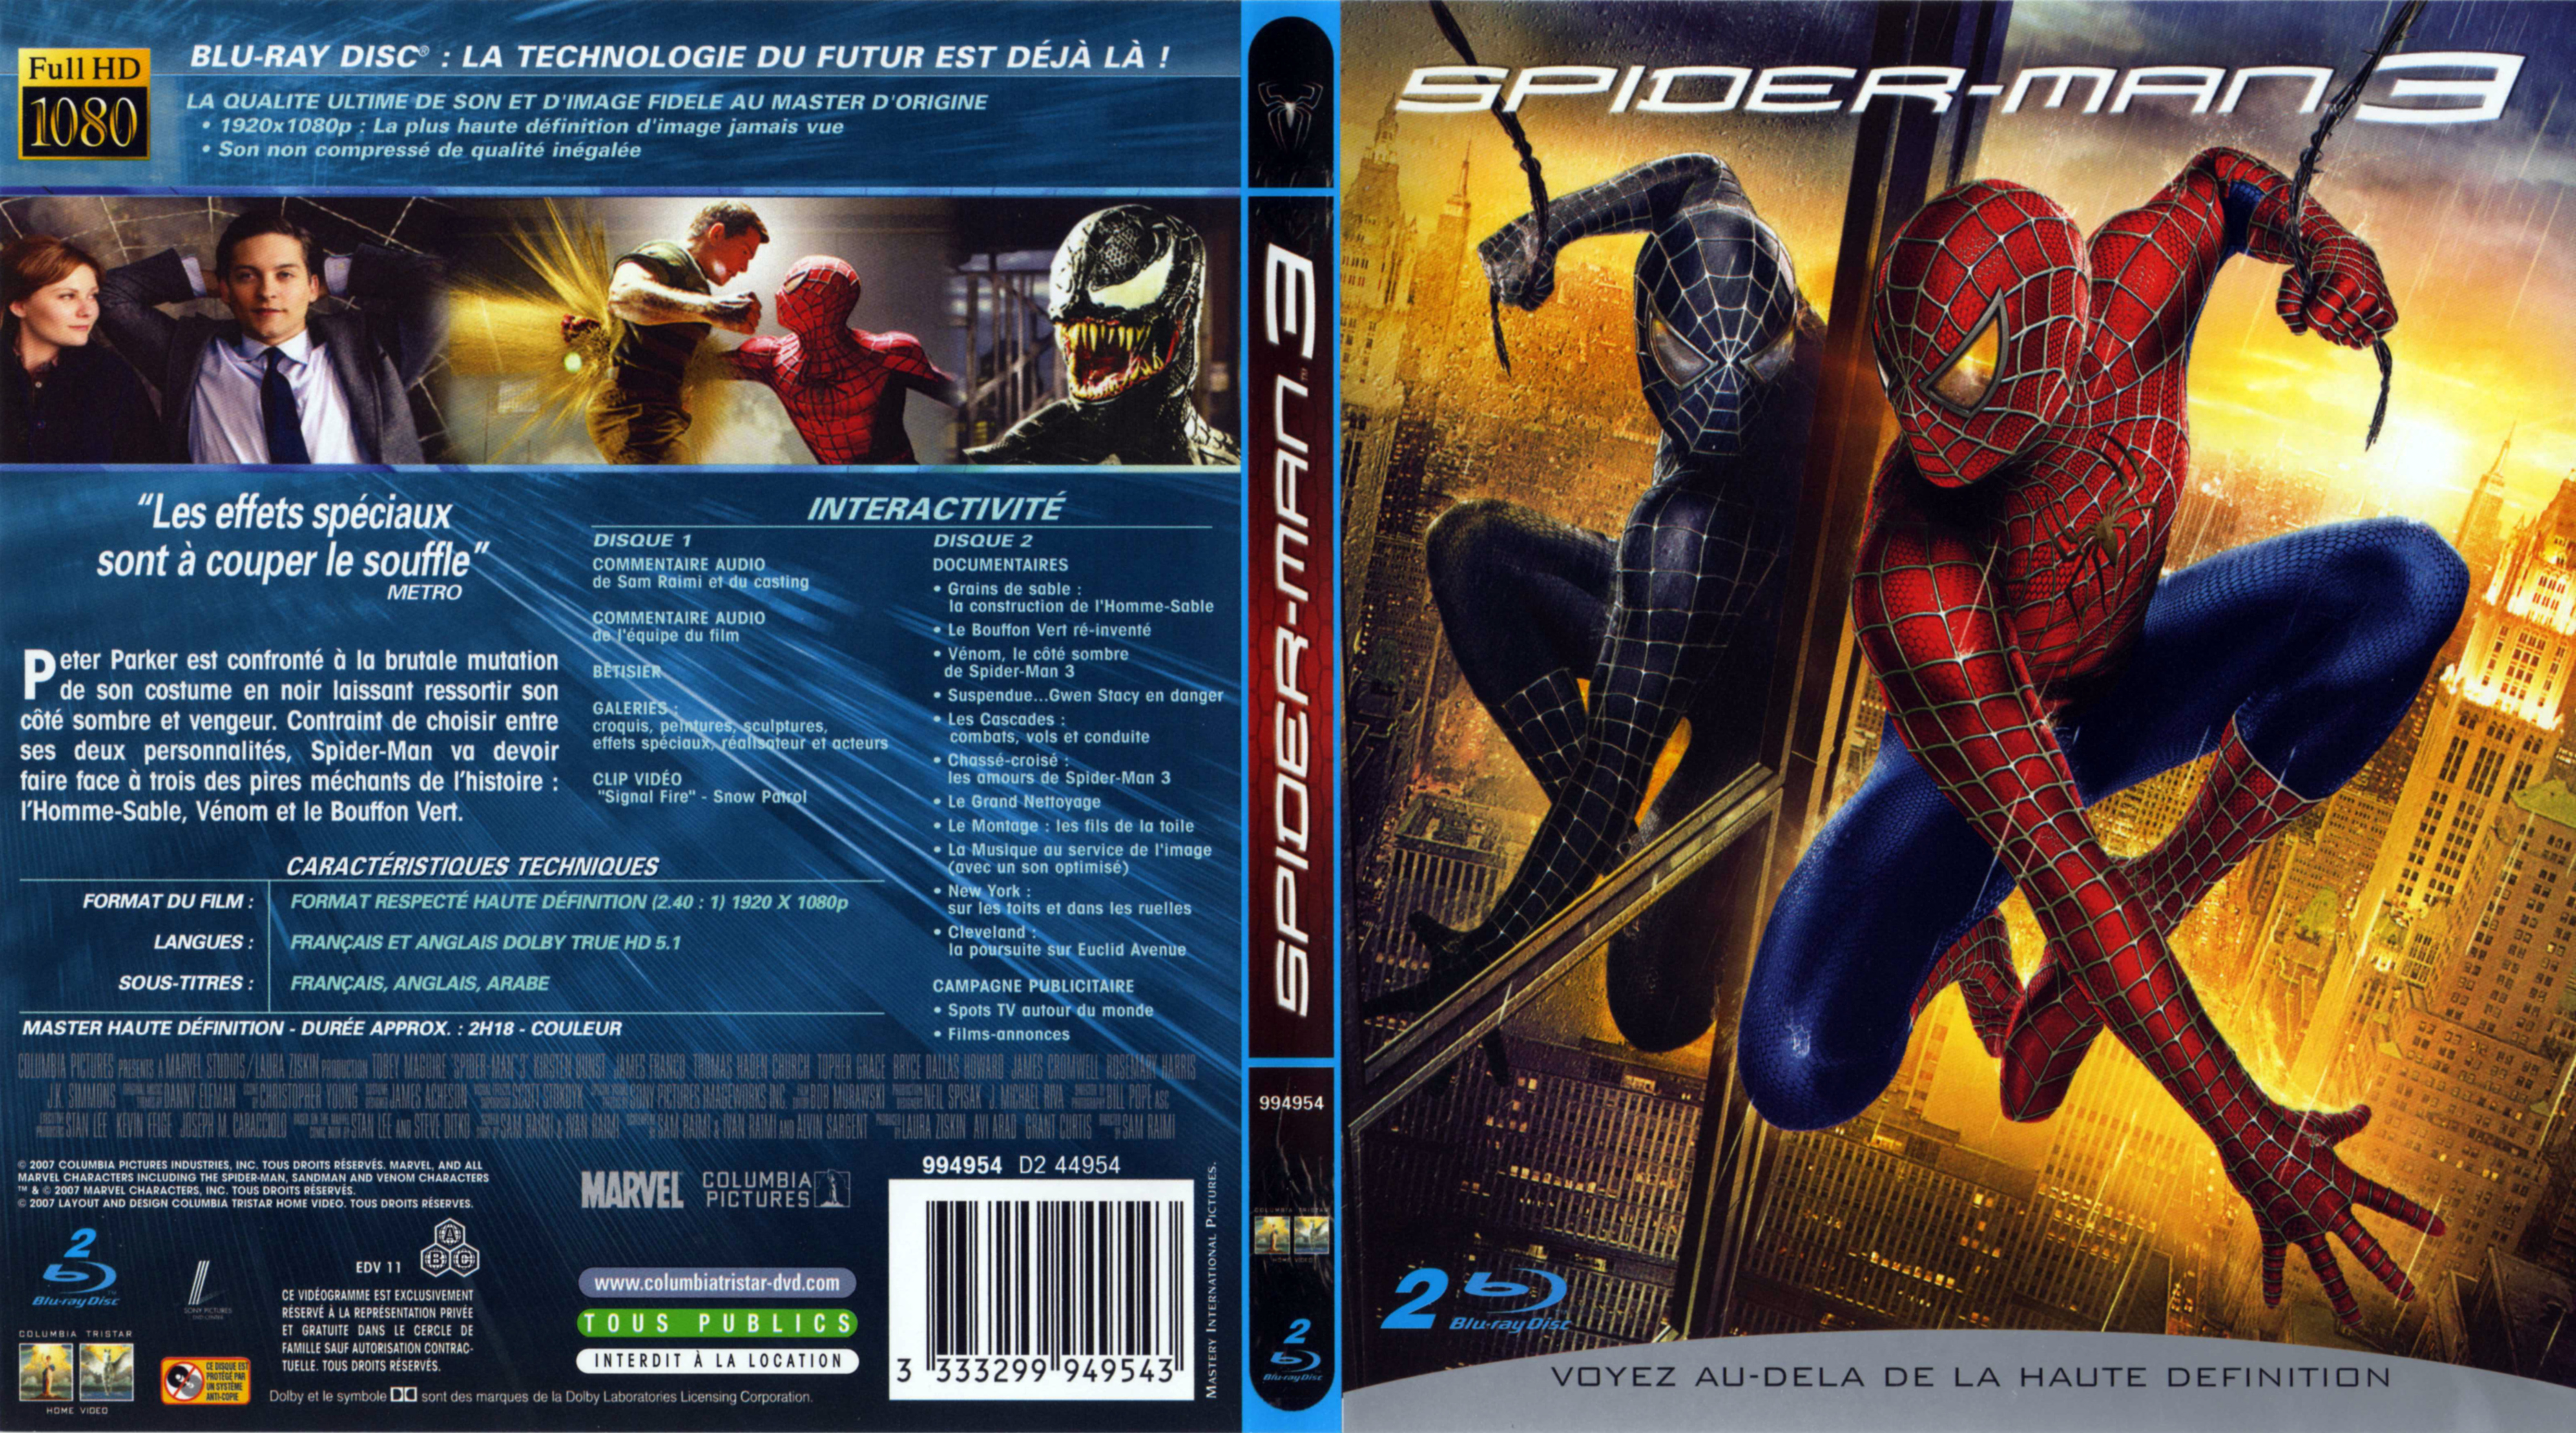 Jaquette DVD Spiderman 3 (BLU-RAY)